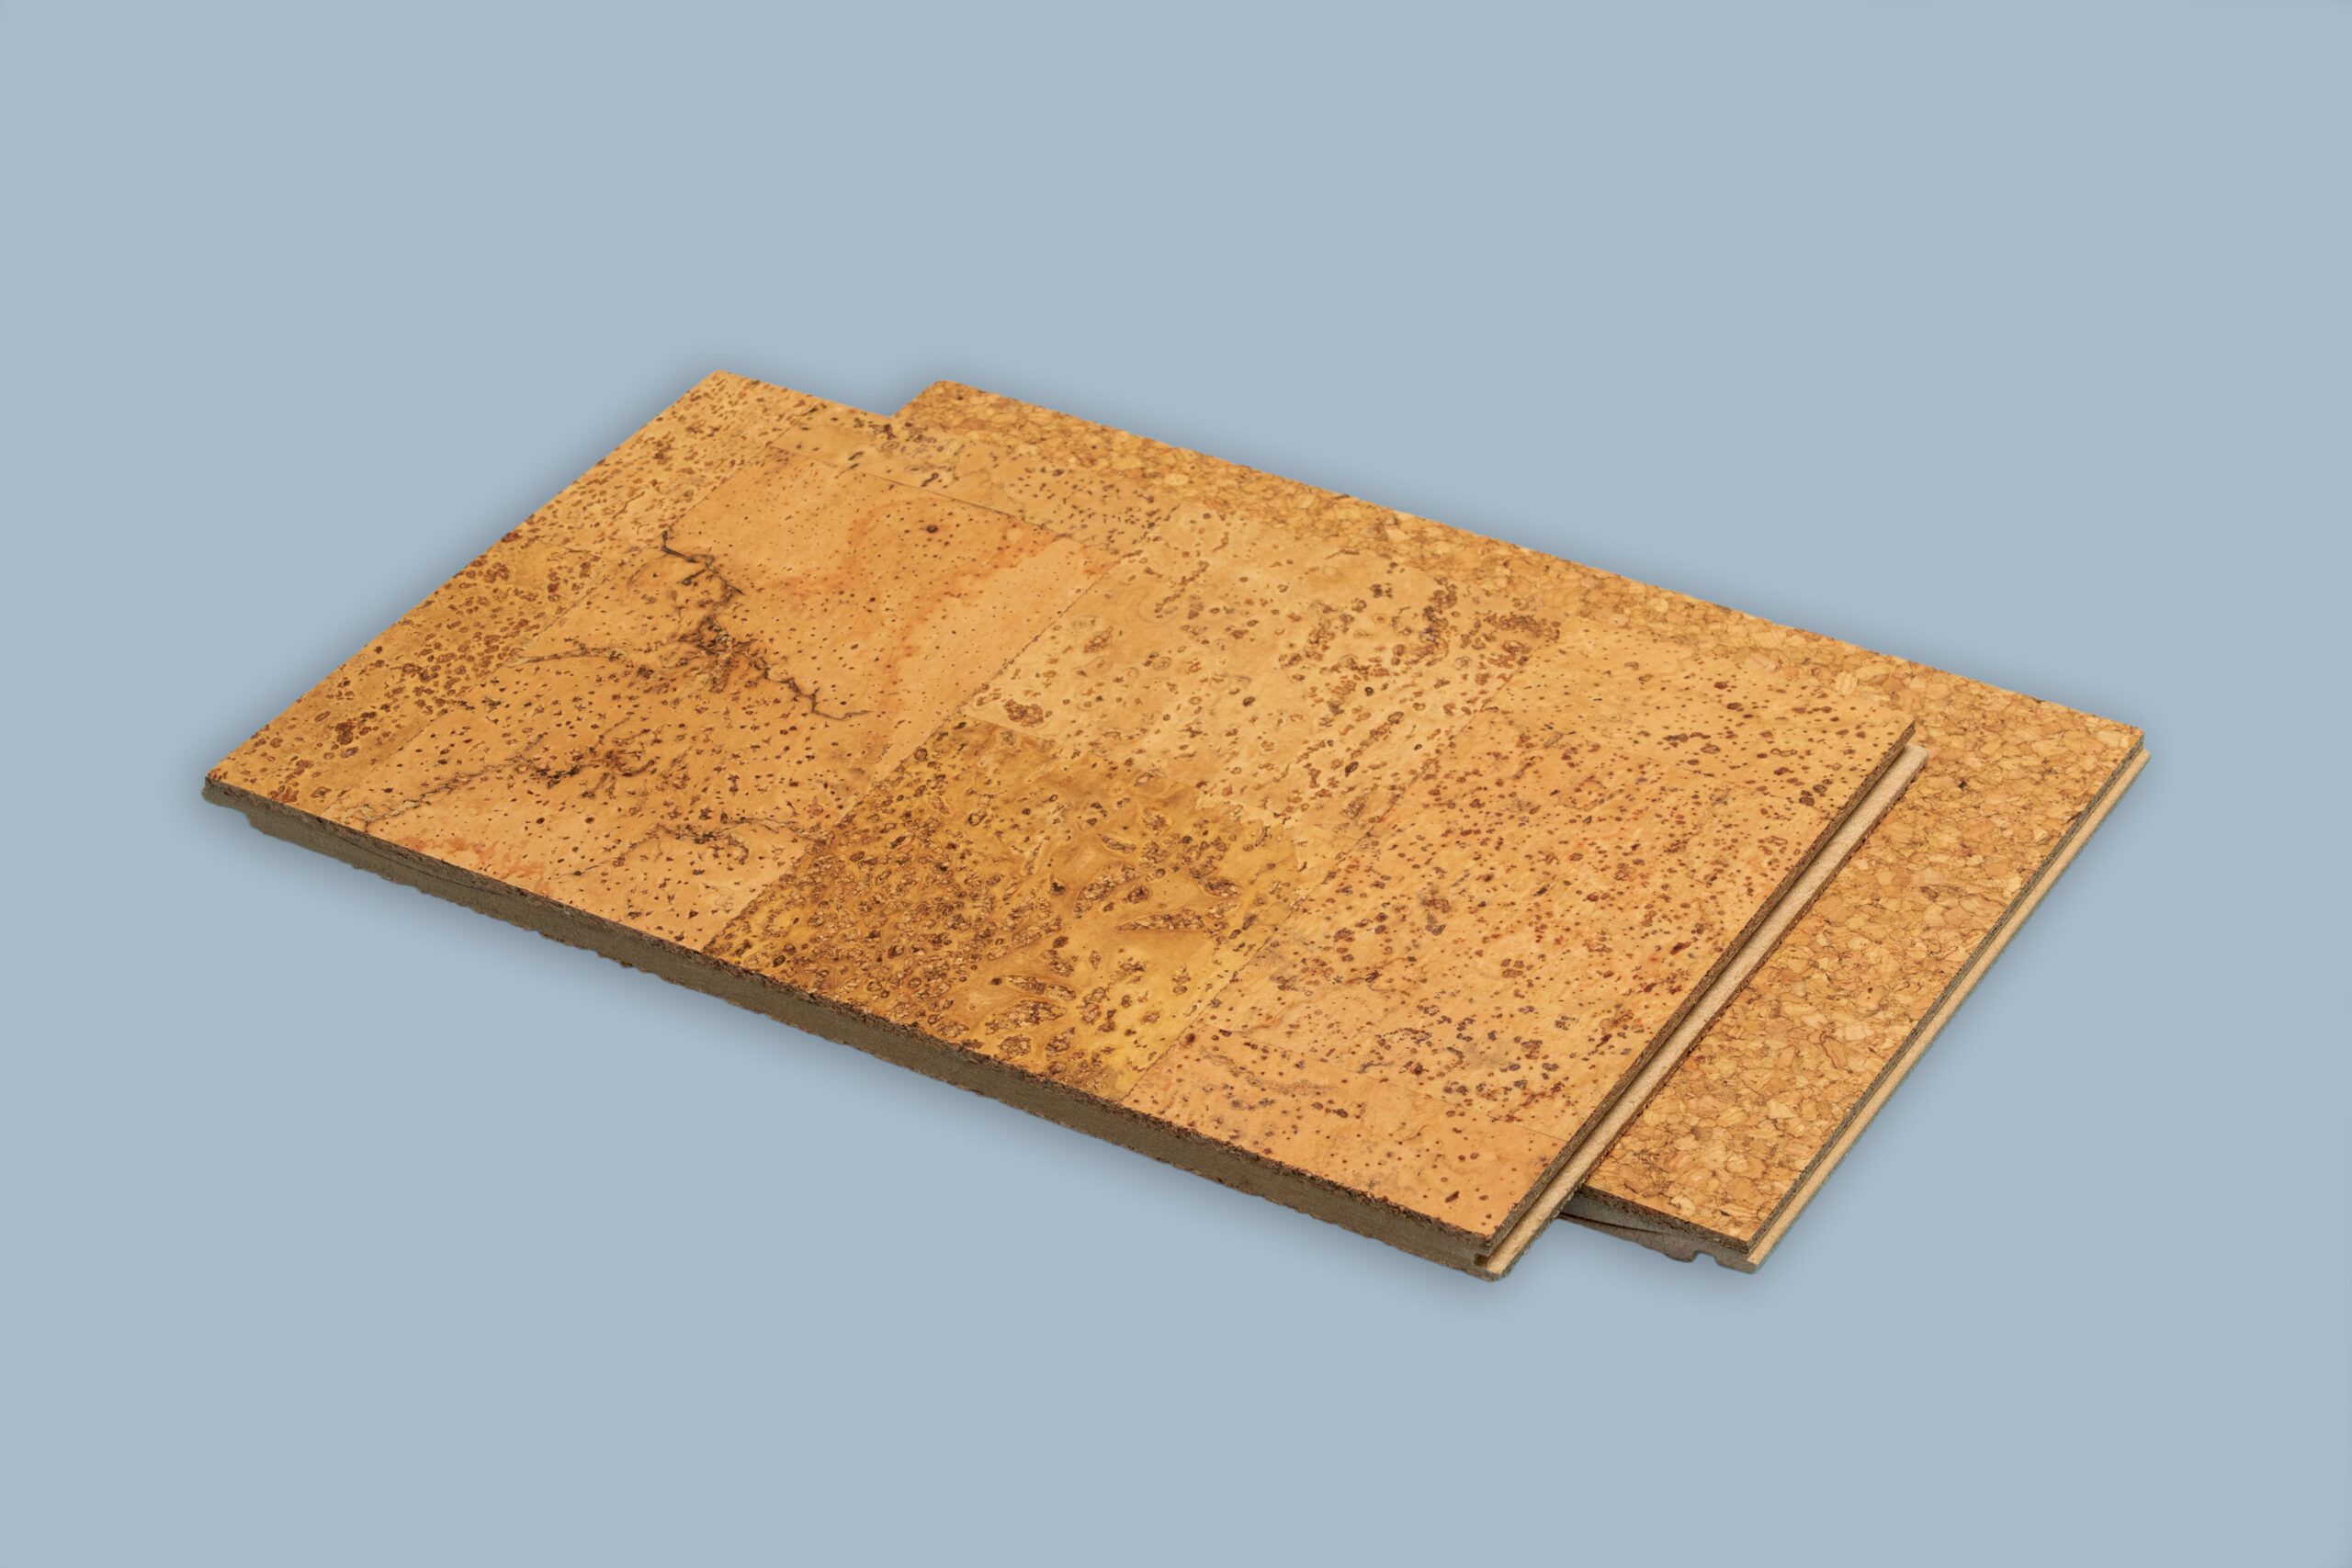 Cork Flooring Australia: Cost, Tiles Options, Cork Floor Pros & Cons